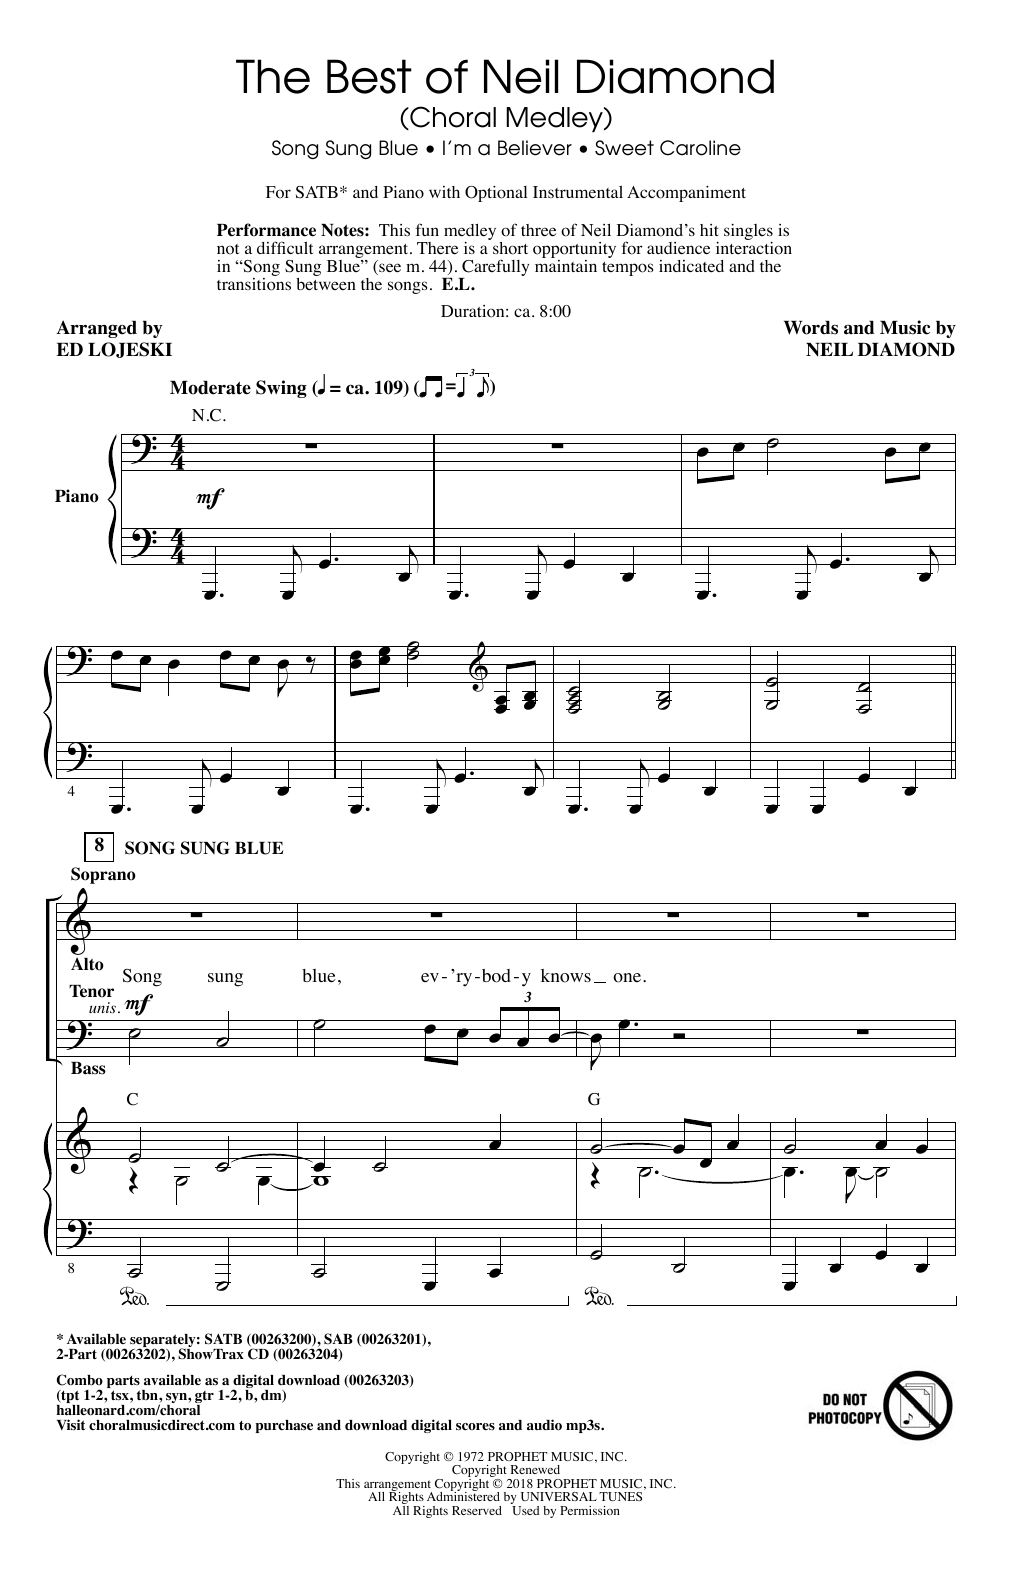 Neil Diamond The Best of Neil Diamond (arr. Ed Lojeski) Sheet Music Notes & Chords for SAB - Download or Print PDF